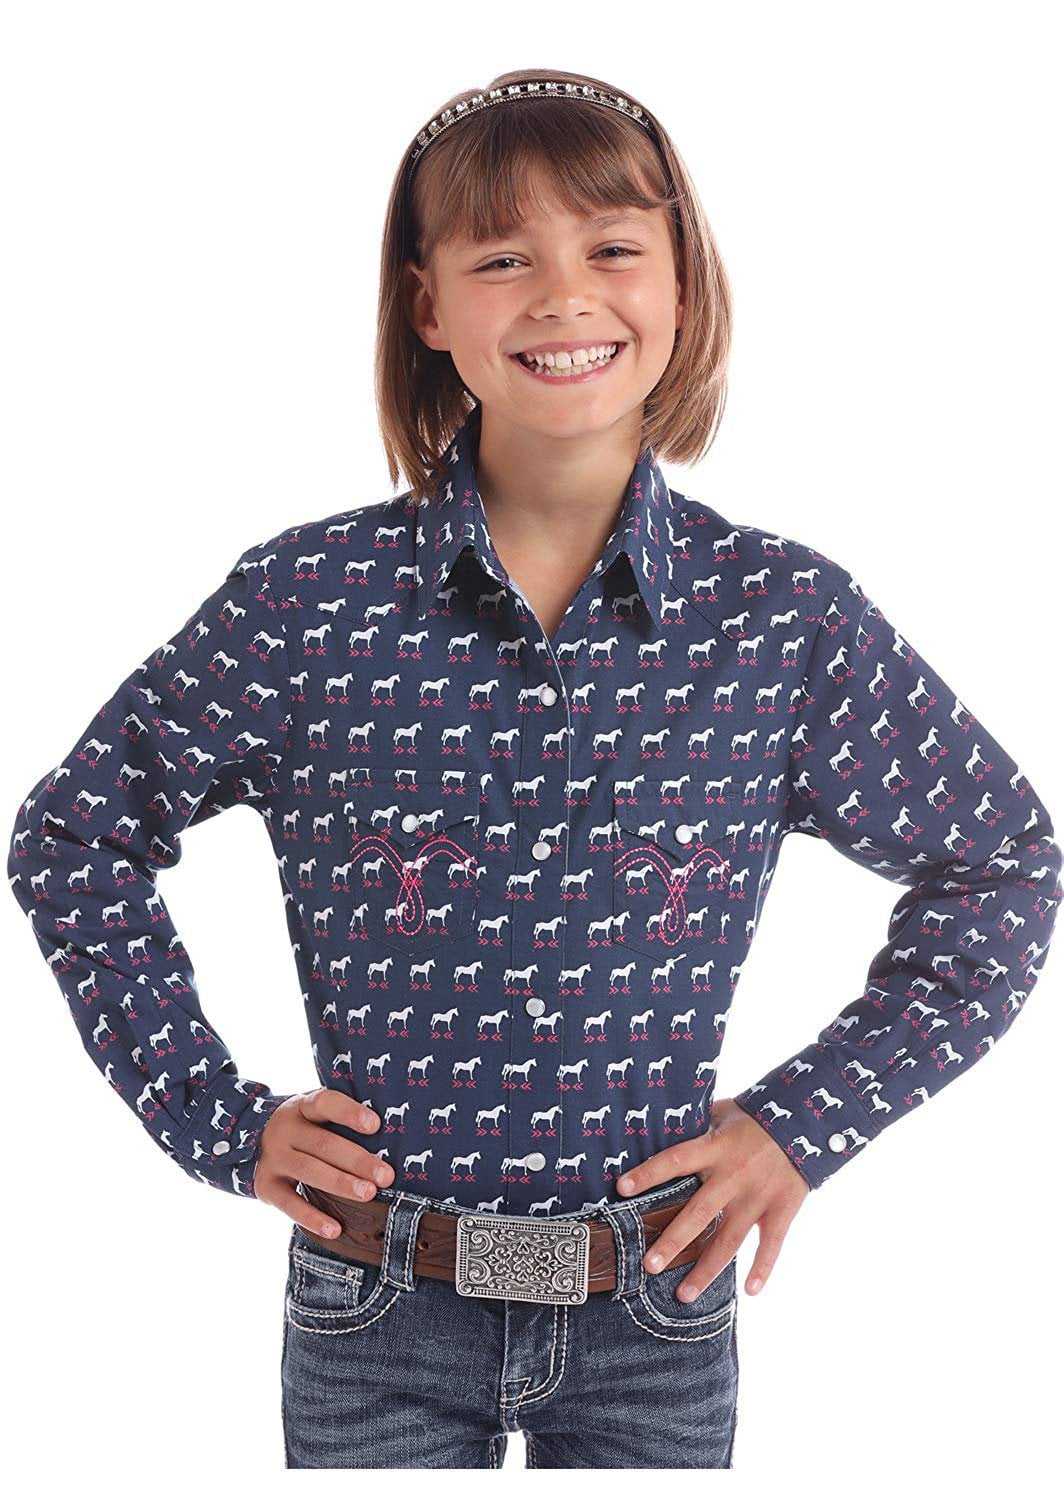 Panhandle Boys WSL Horse Print Shirt XL Navy - Walmart.com